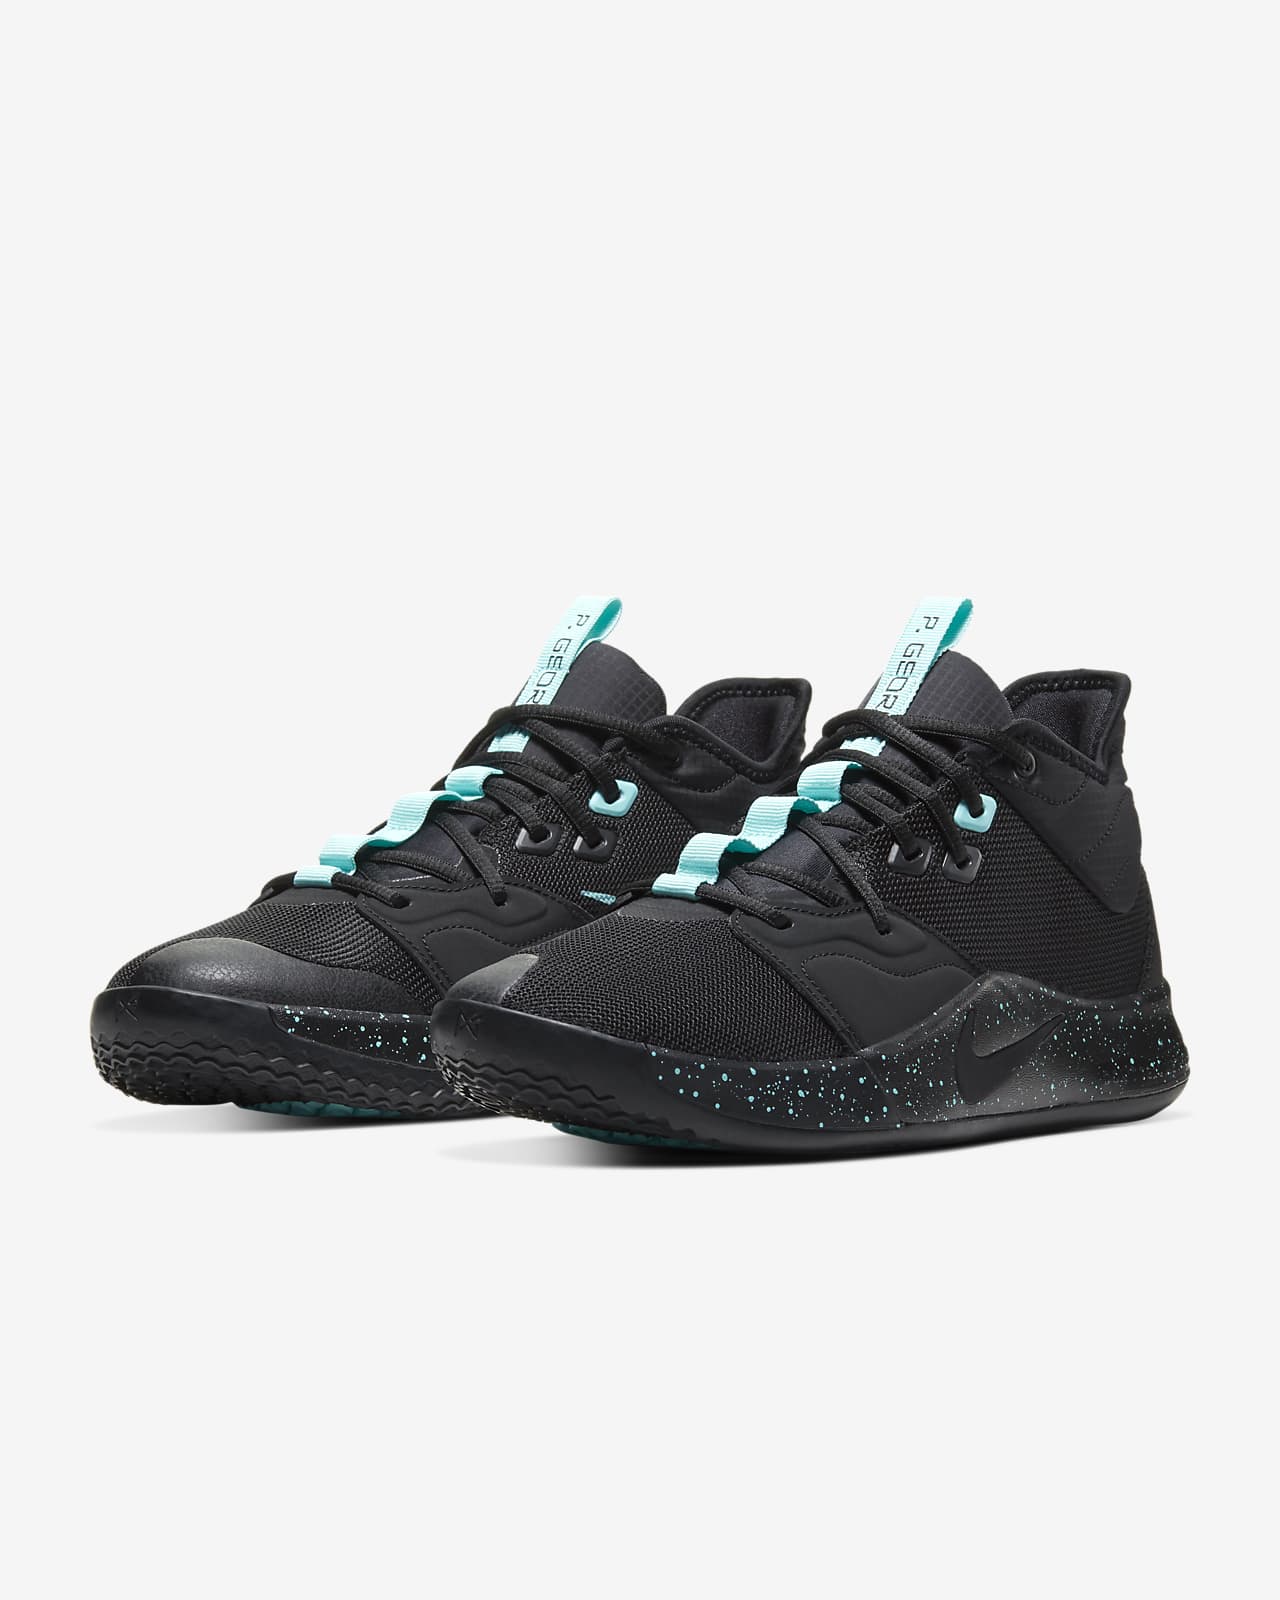 PG 3 Basketball Shoe. Nike.com